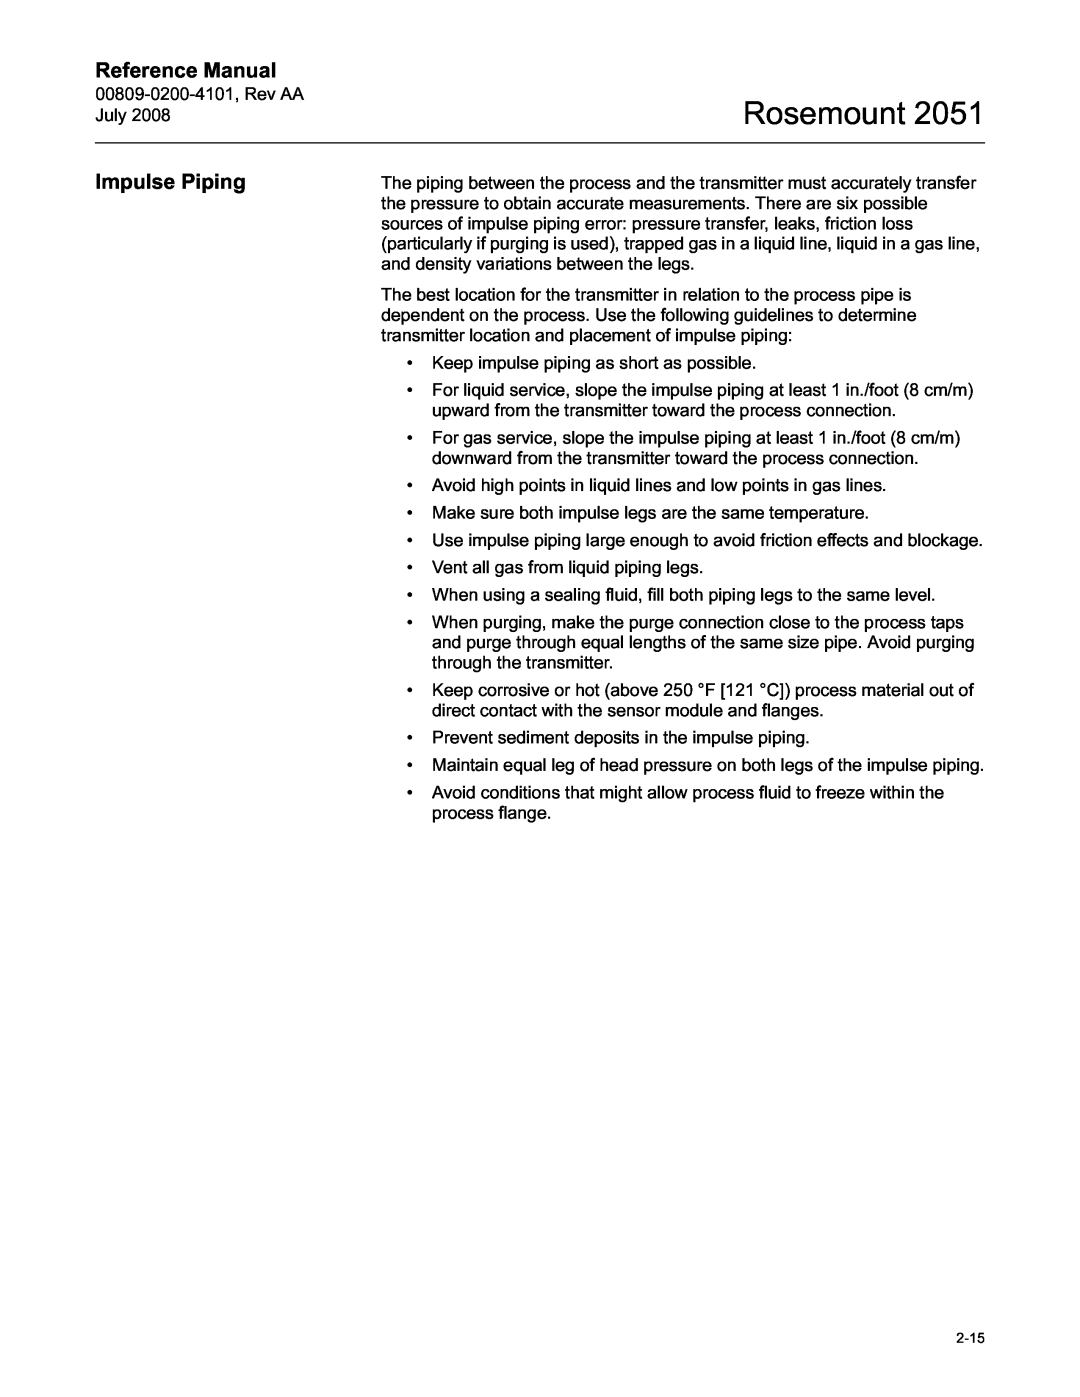 Emerson Process Management 2051 manual Impulse Piping, Rosemount, Reference Manual 